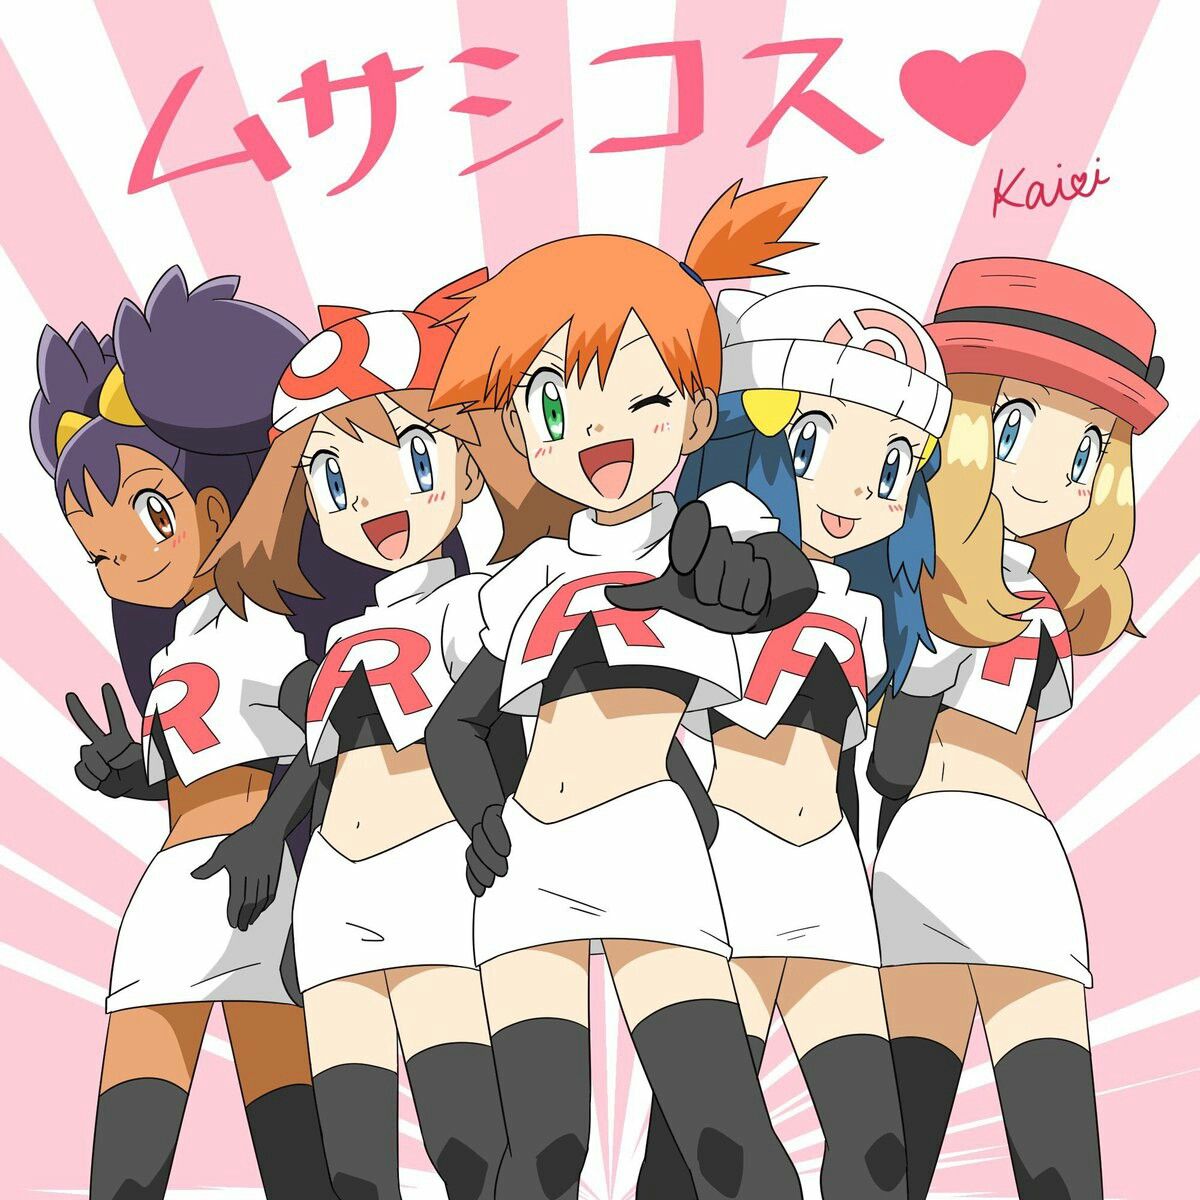 Anime Girls In The Team Rocket Animoe